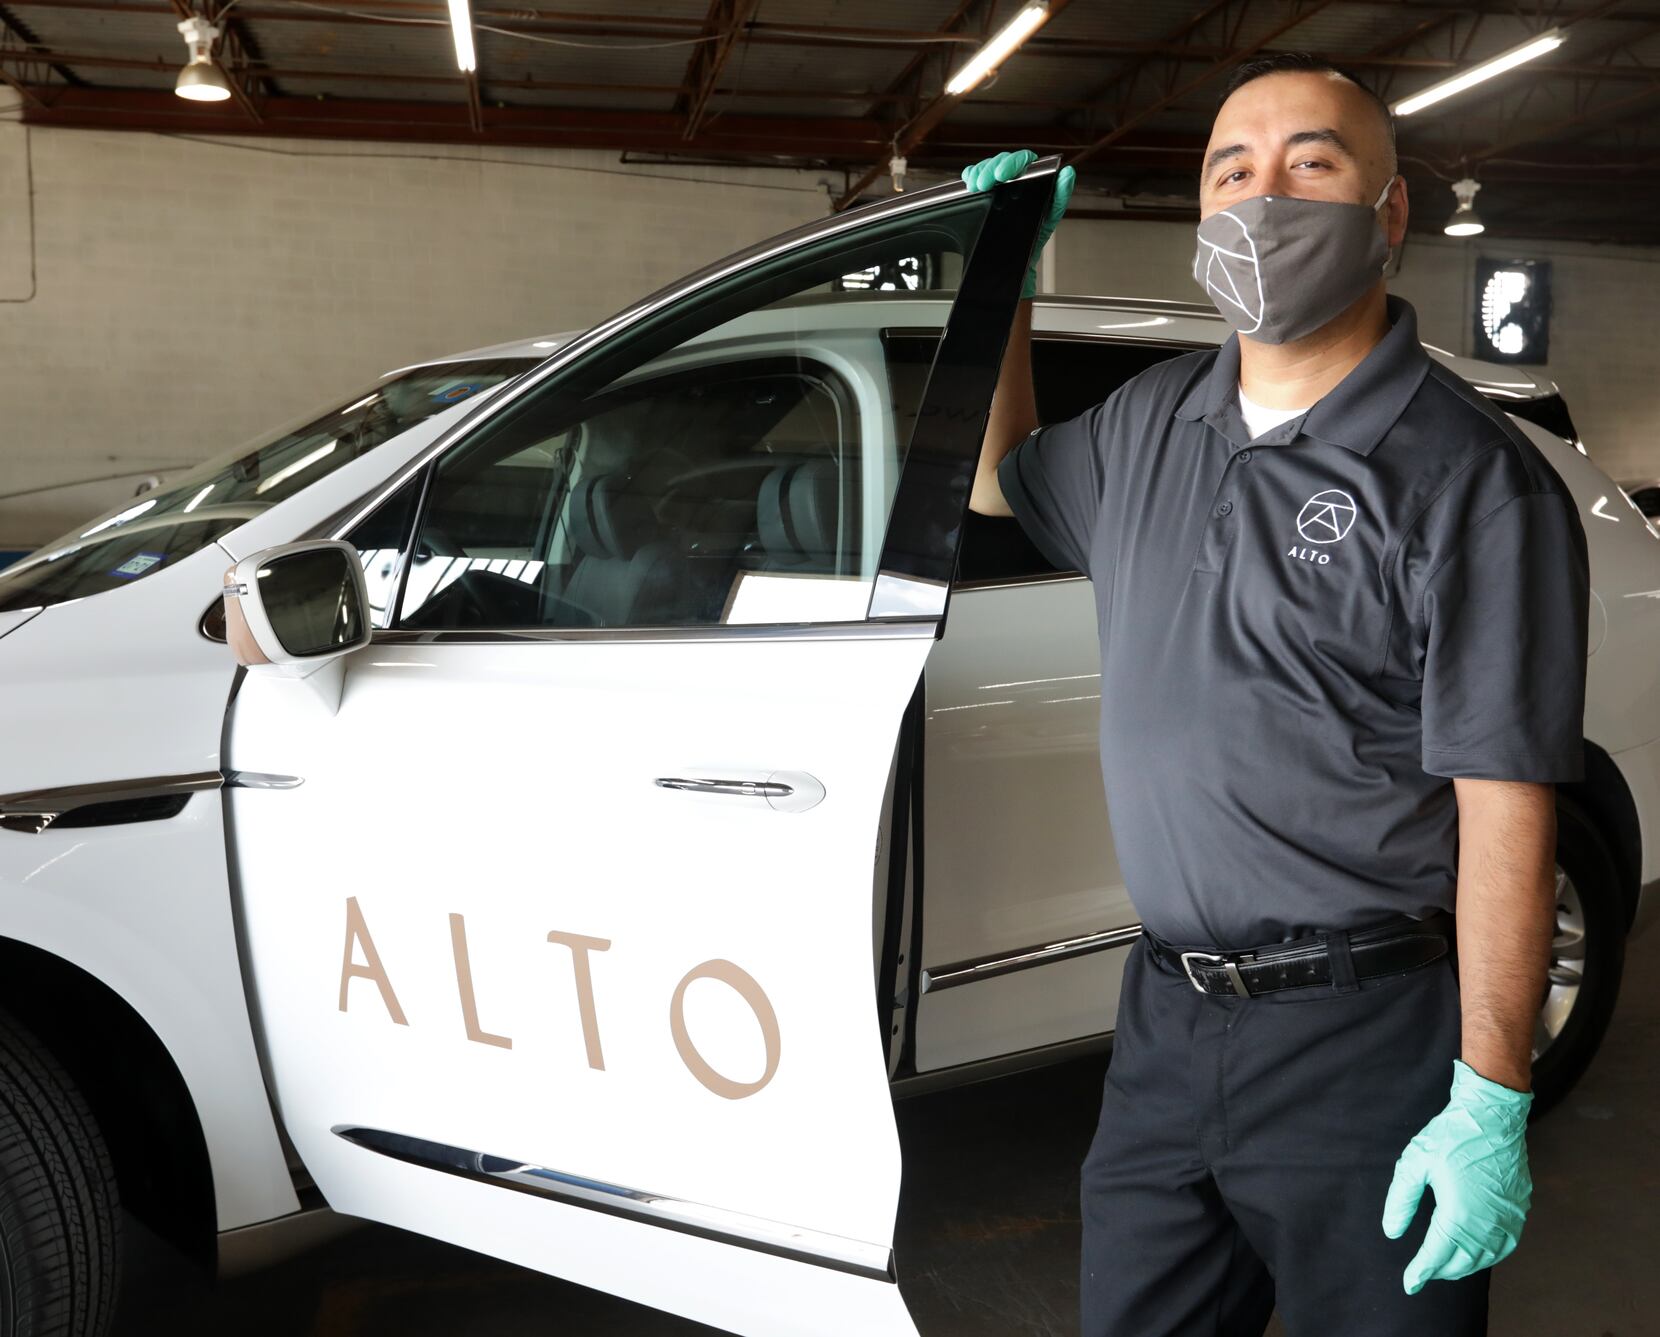 Trending in Texas: How rideshare brand Alto resonates with women